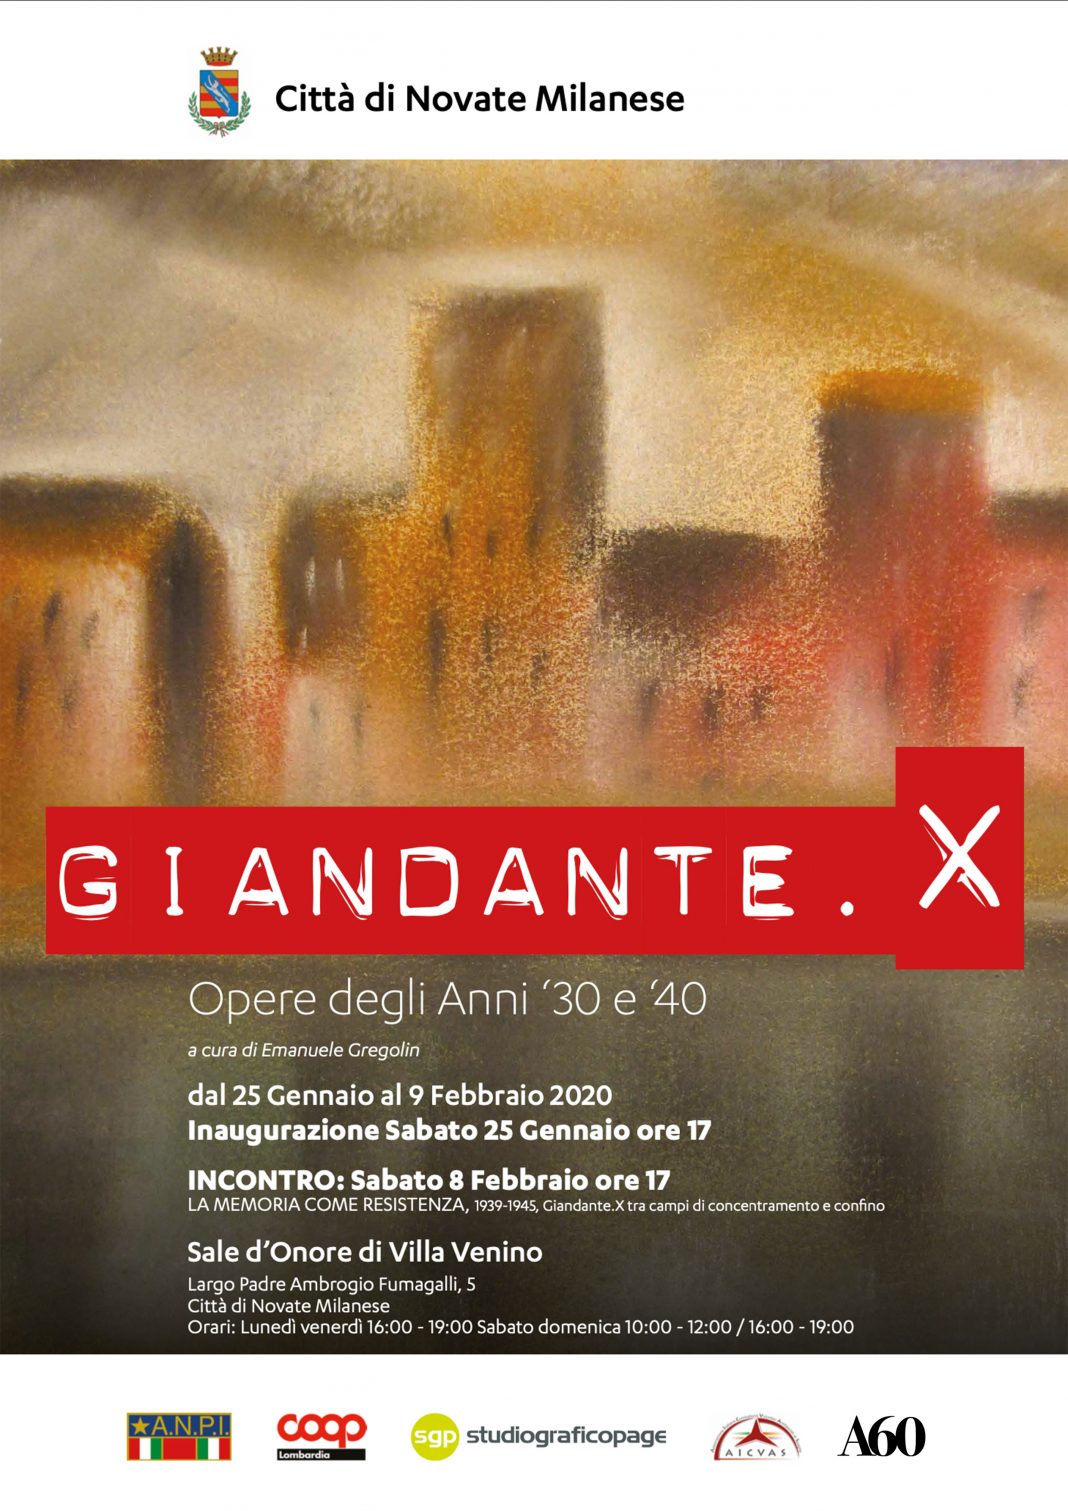 Giandante. Xhttps://www.exibart.com/repository/media/formidable/11/Giandante.X-1068x1511.jpg